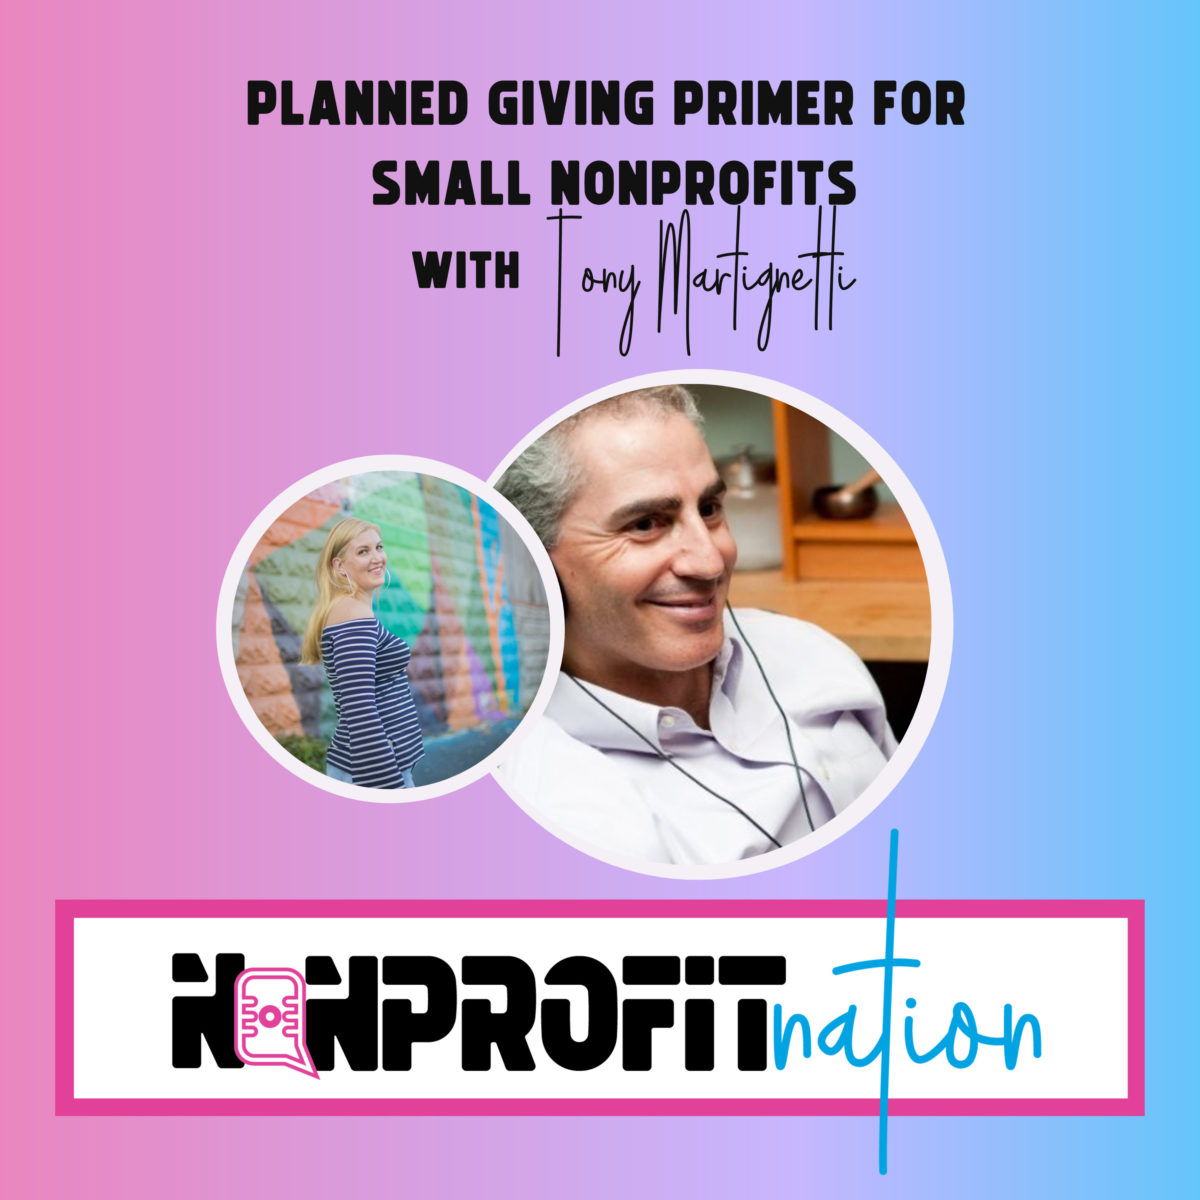 Planned Giving Primer for Small Nonprofits with Tony Martignetti